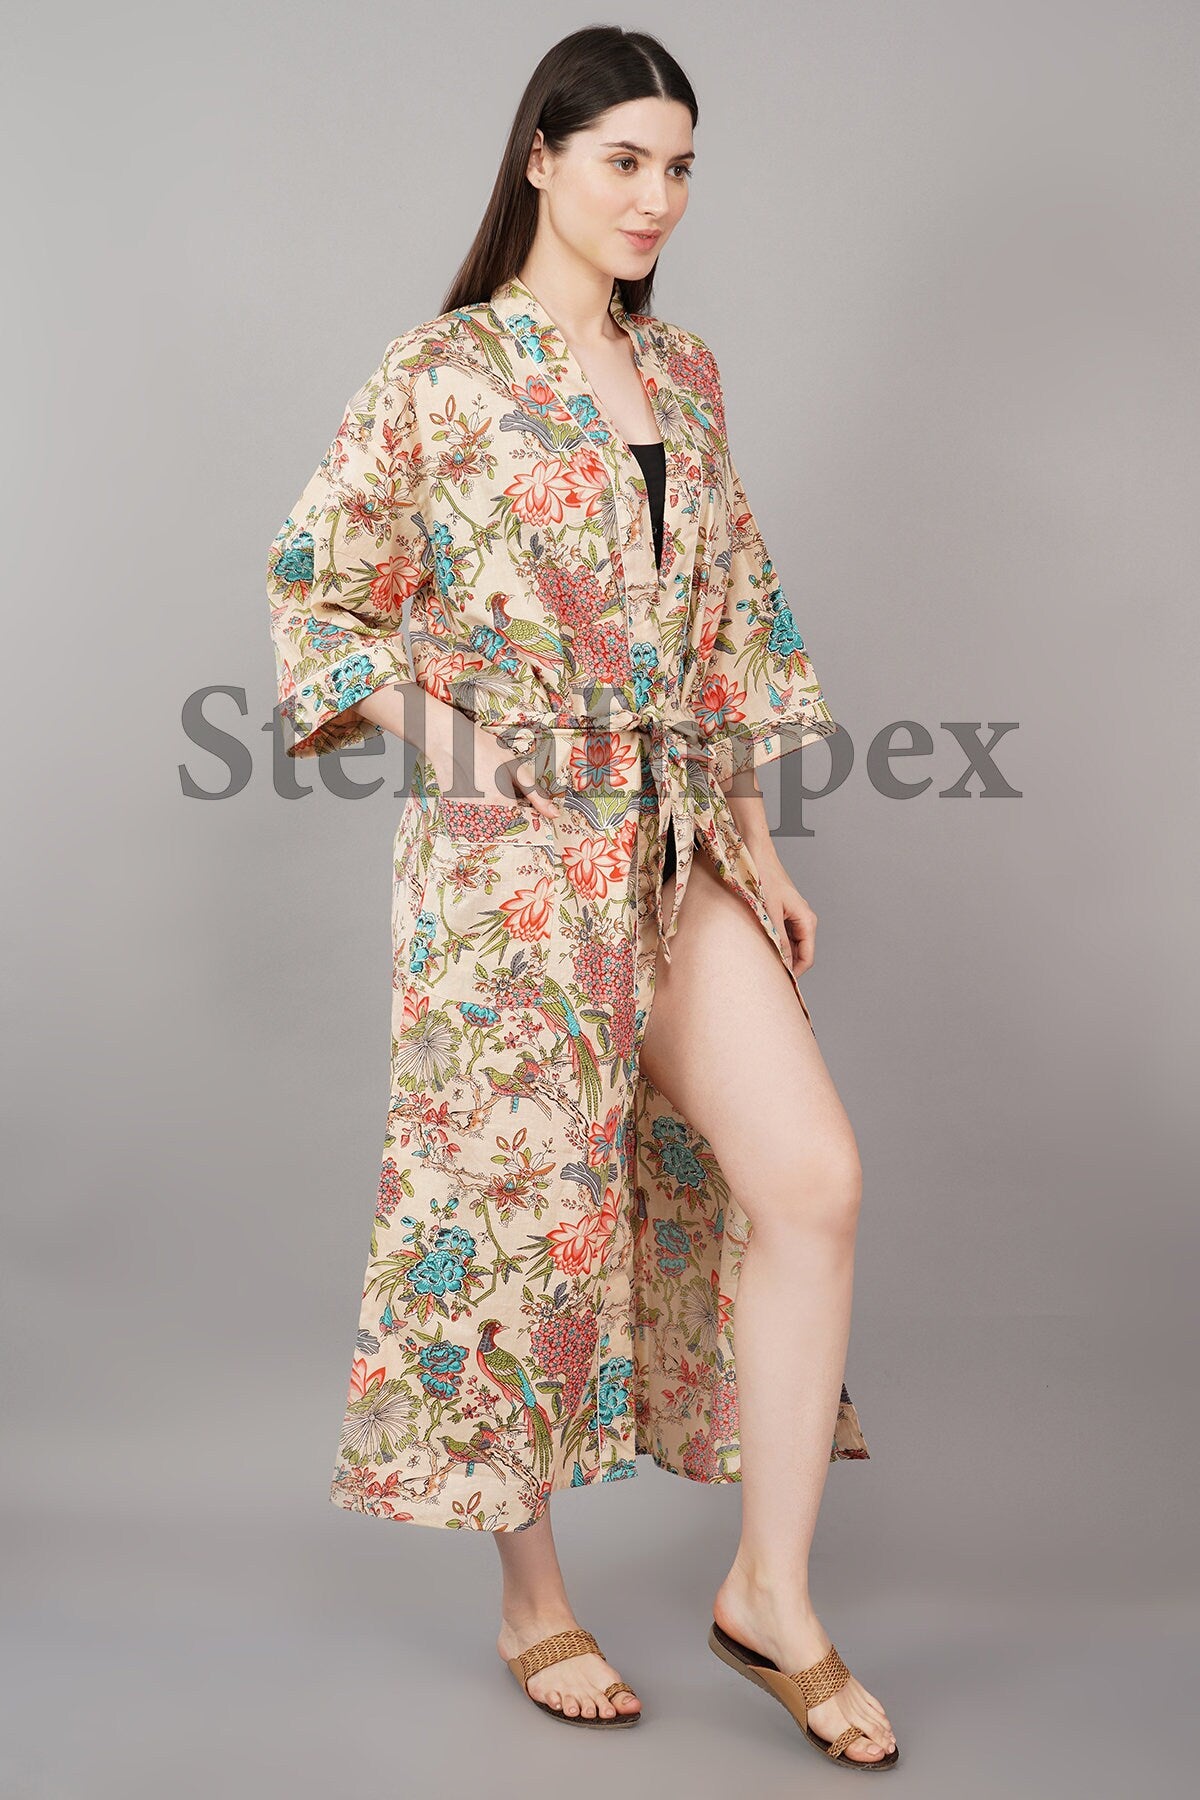 Trendy Cotton Kimono Elegant Multi-Color Floral Bathrobe Resort Wear Beach Bikini Cover-ups Boho Kimono Bathrobe, Gift for Her